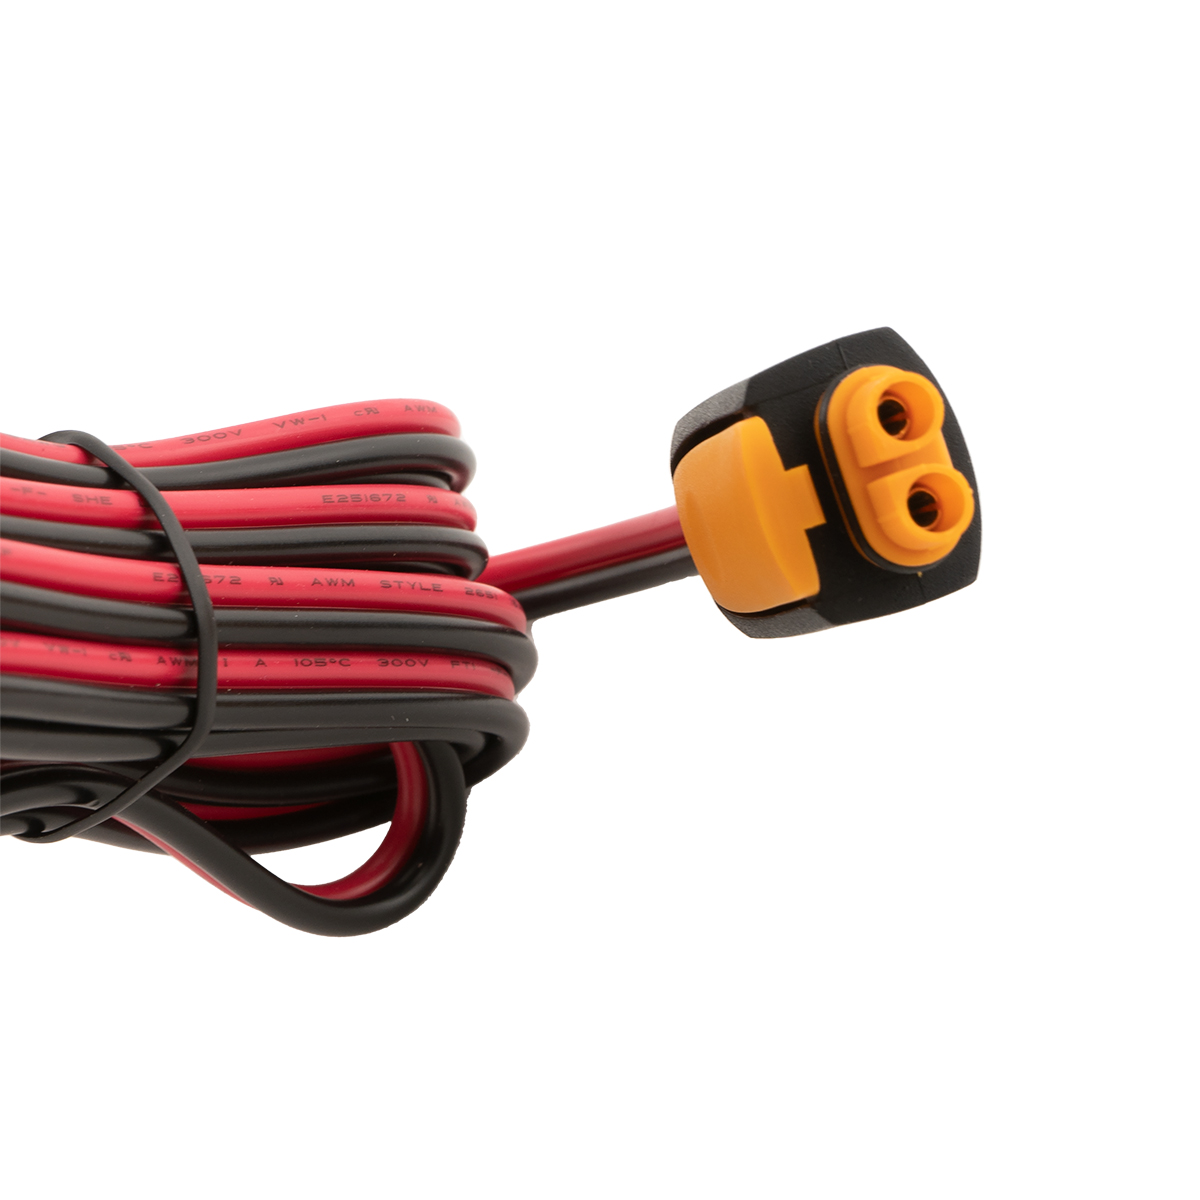 CTEK Comfort Connect Cig Plug Adapter für alle 12V Ladegeräte